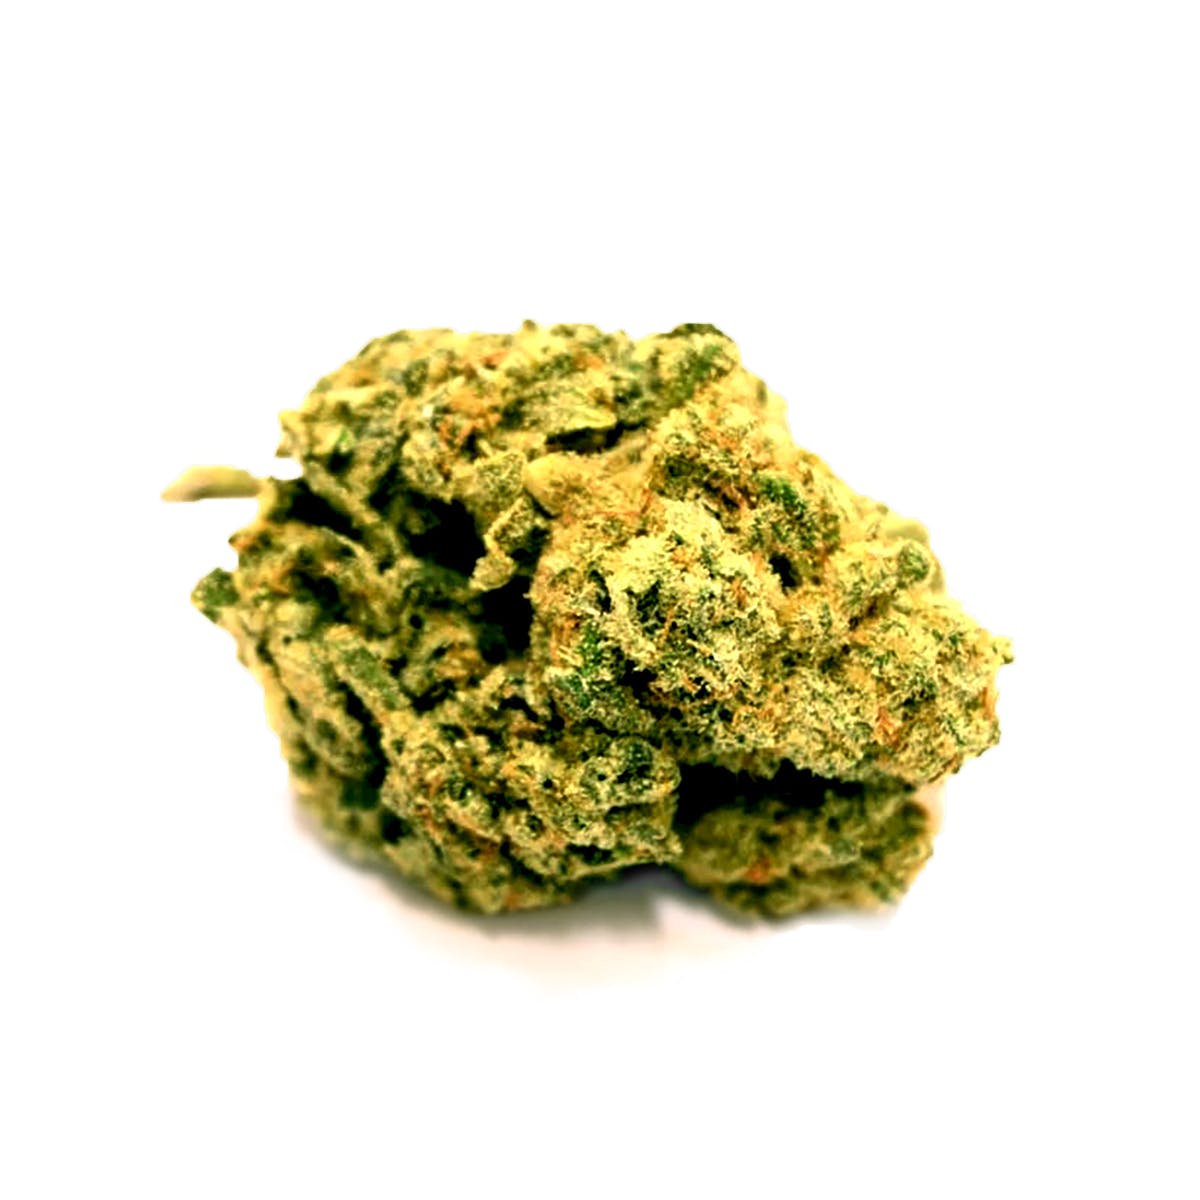 marijuana-dispensaries-locals-canna-house-in-spokane-valley-ice